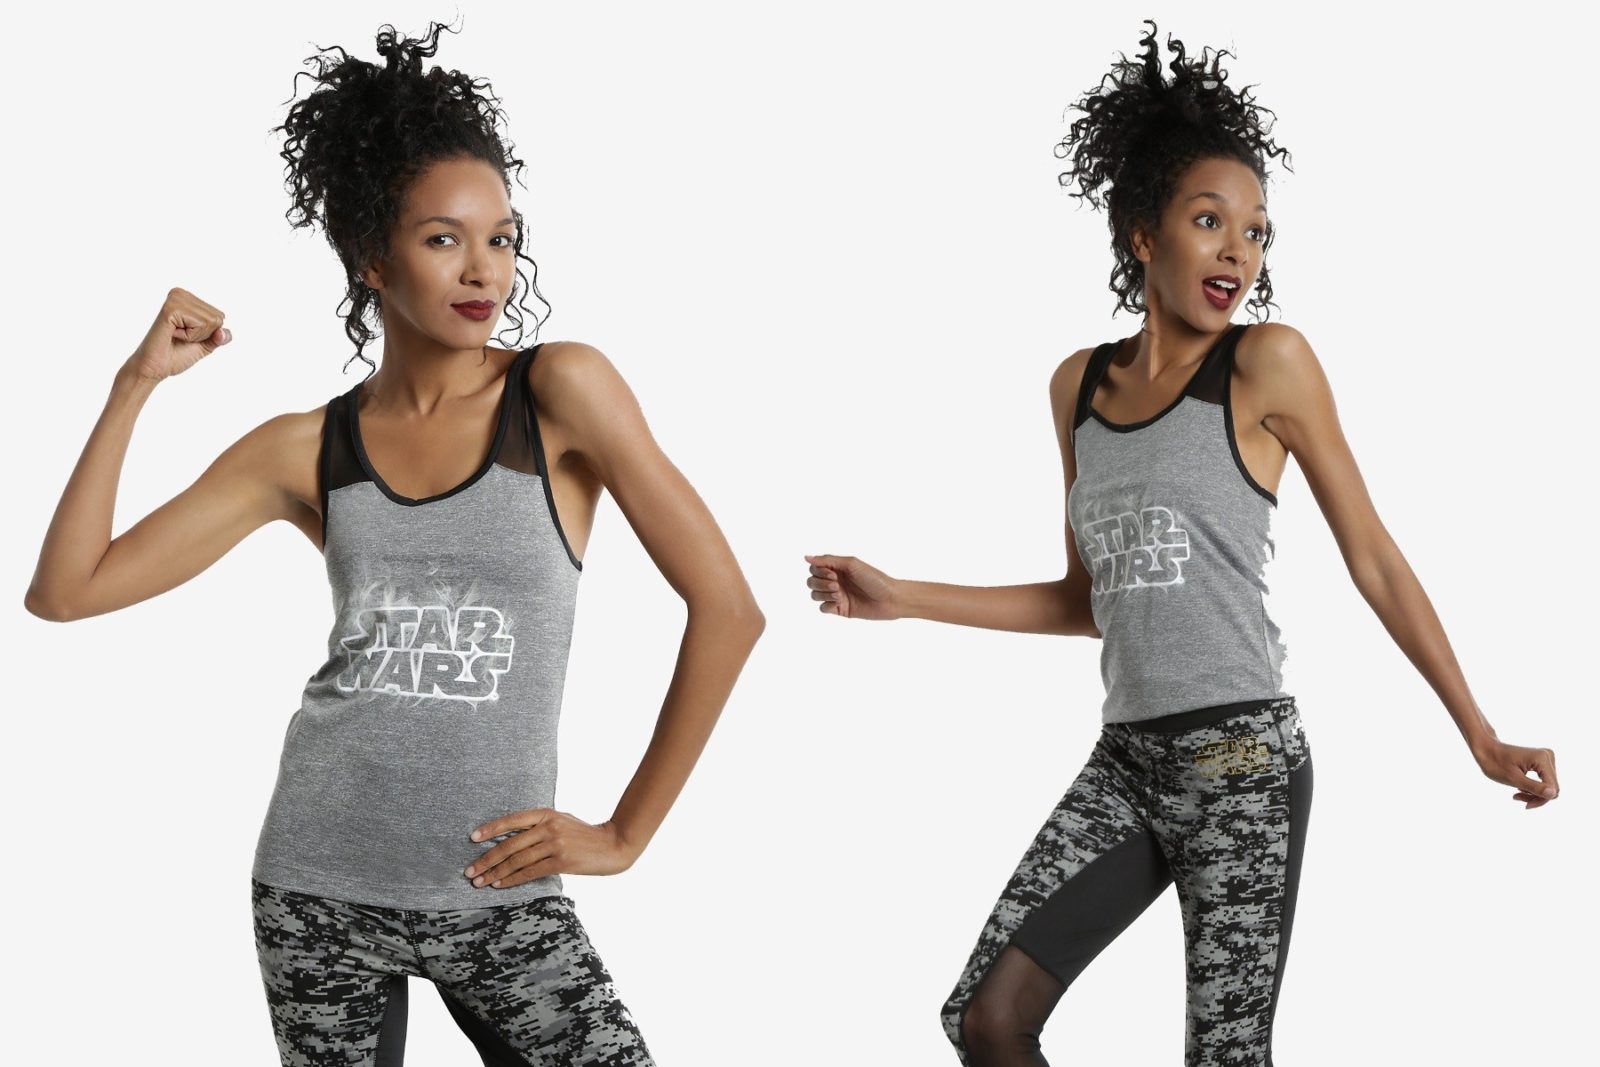 Box Lunch - women's Star Wars athletic apparel